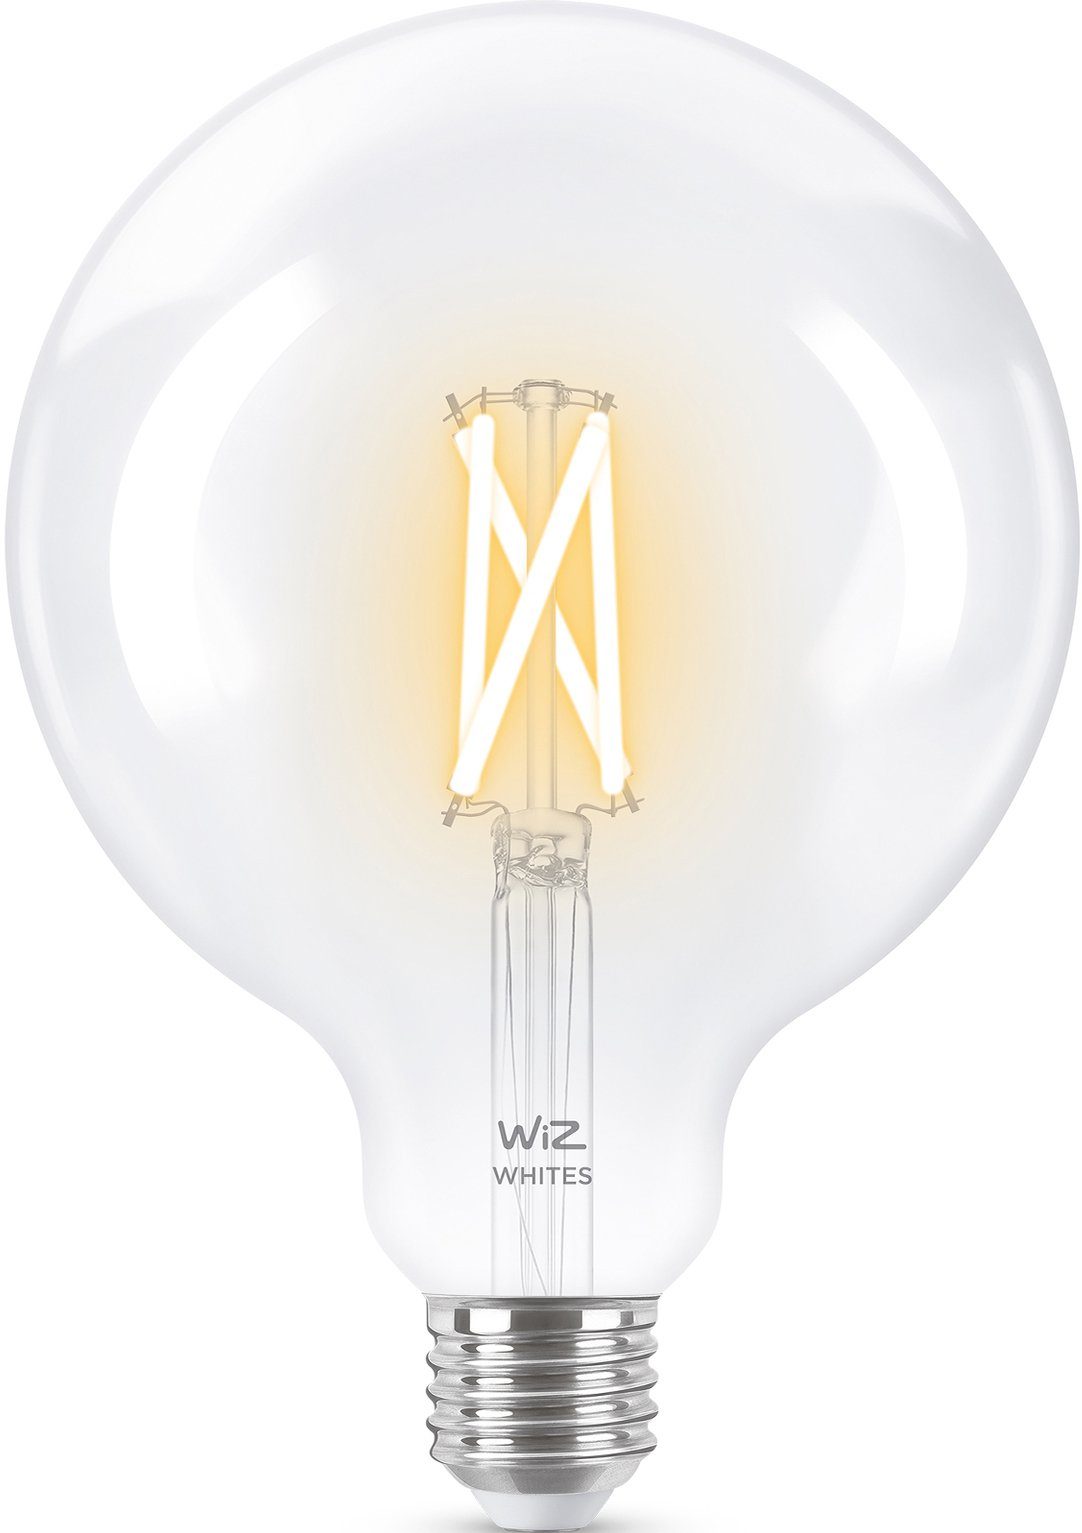 WiZ LED-Filament Filament 60W E27 Globeform G125 Clear Einzelpack, E27, 1 St., Warmweiß, Wiz Tunable White Filament LED Lampen für klassisches Vintage-Design